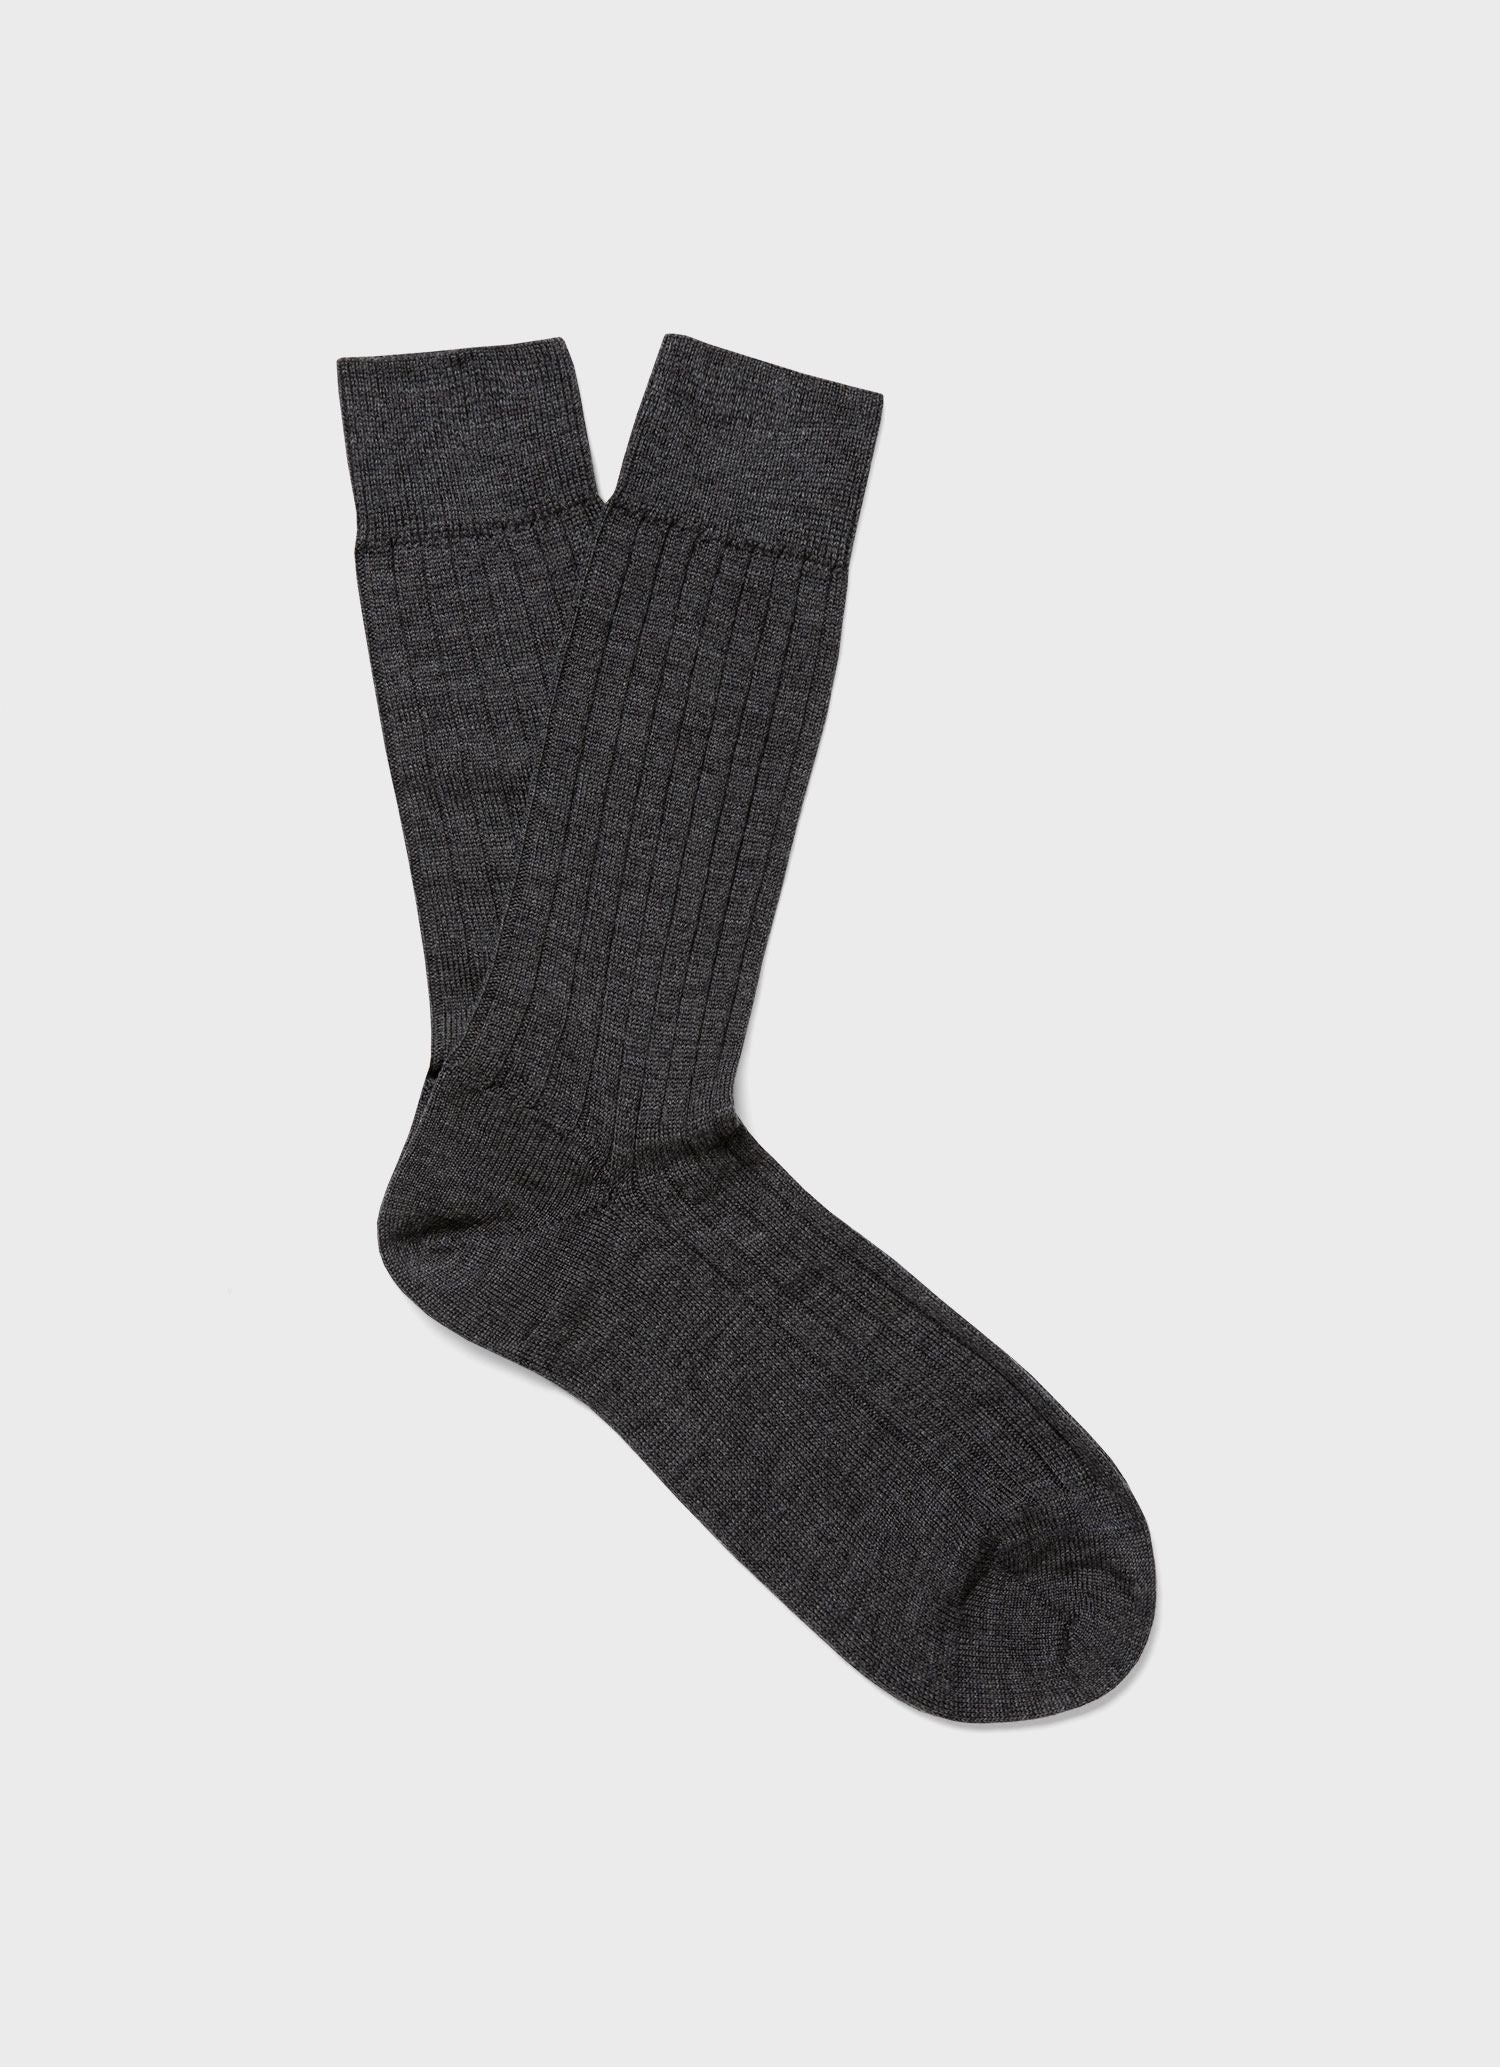 Men's Merino Wool Rib Socks in Charcoal Melange